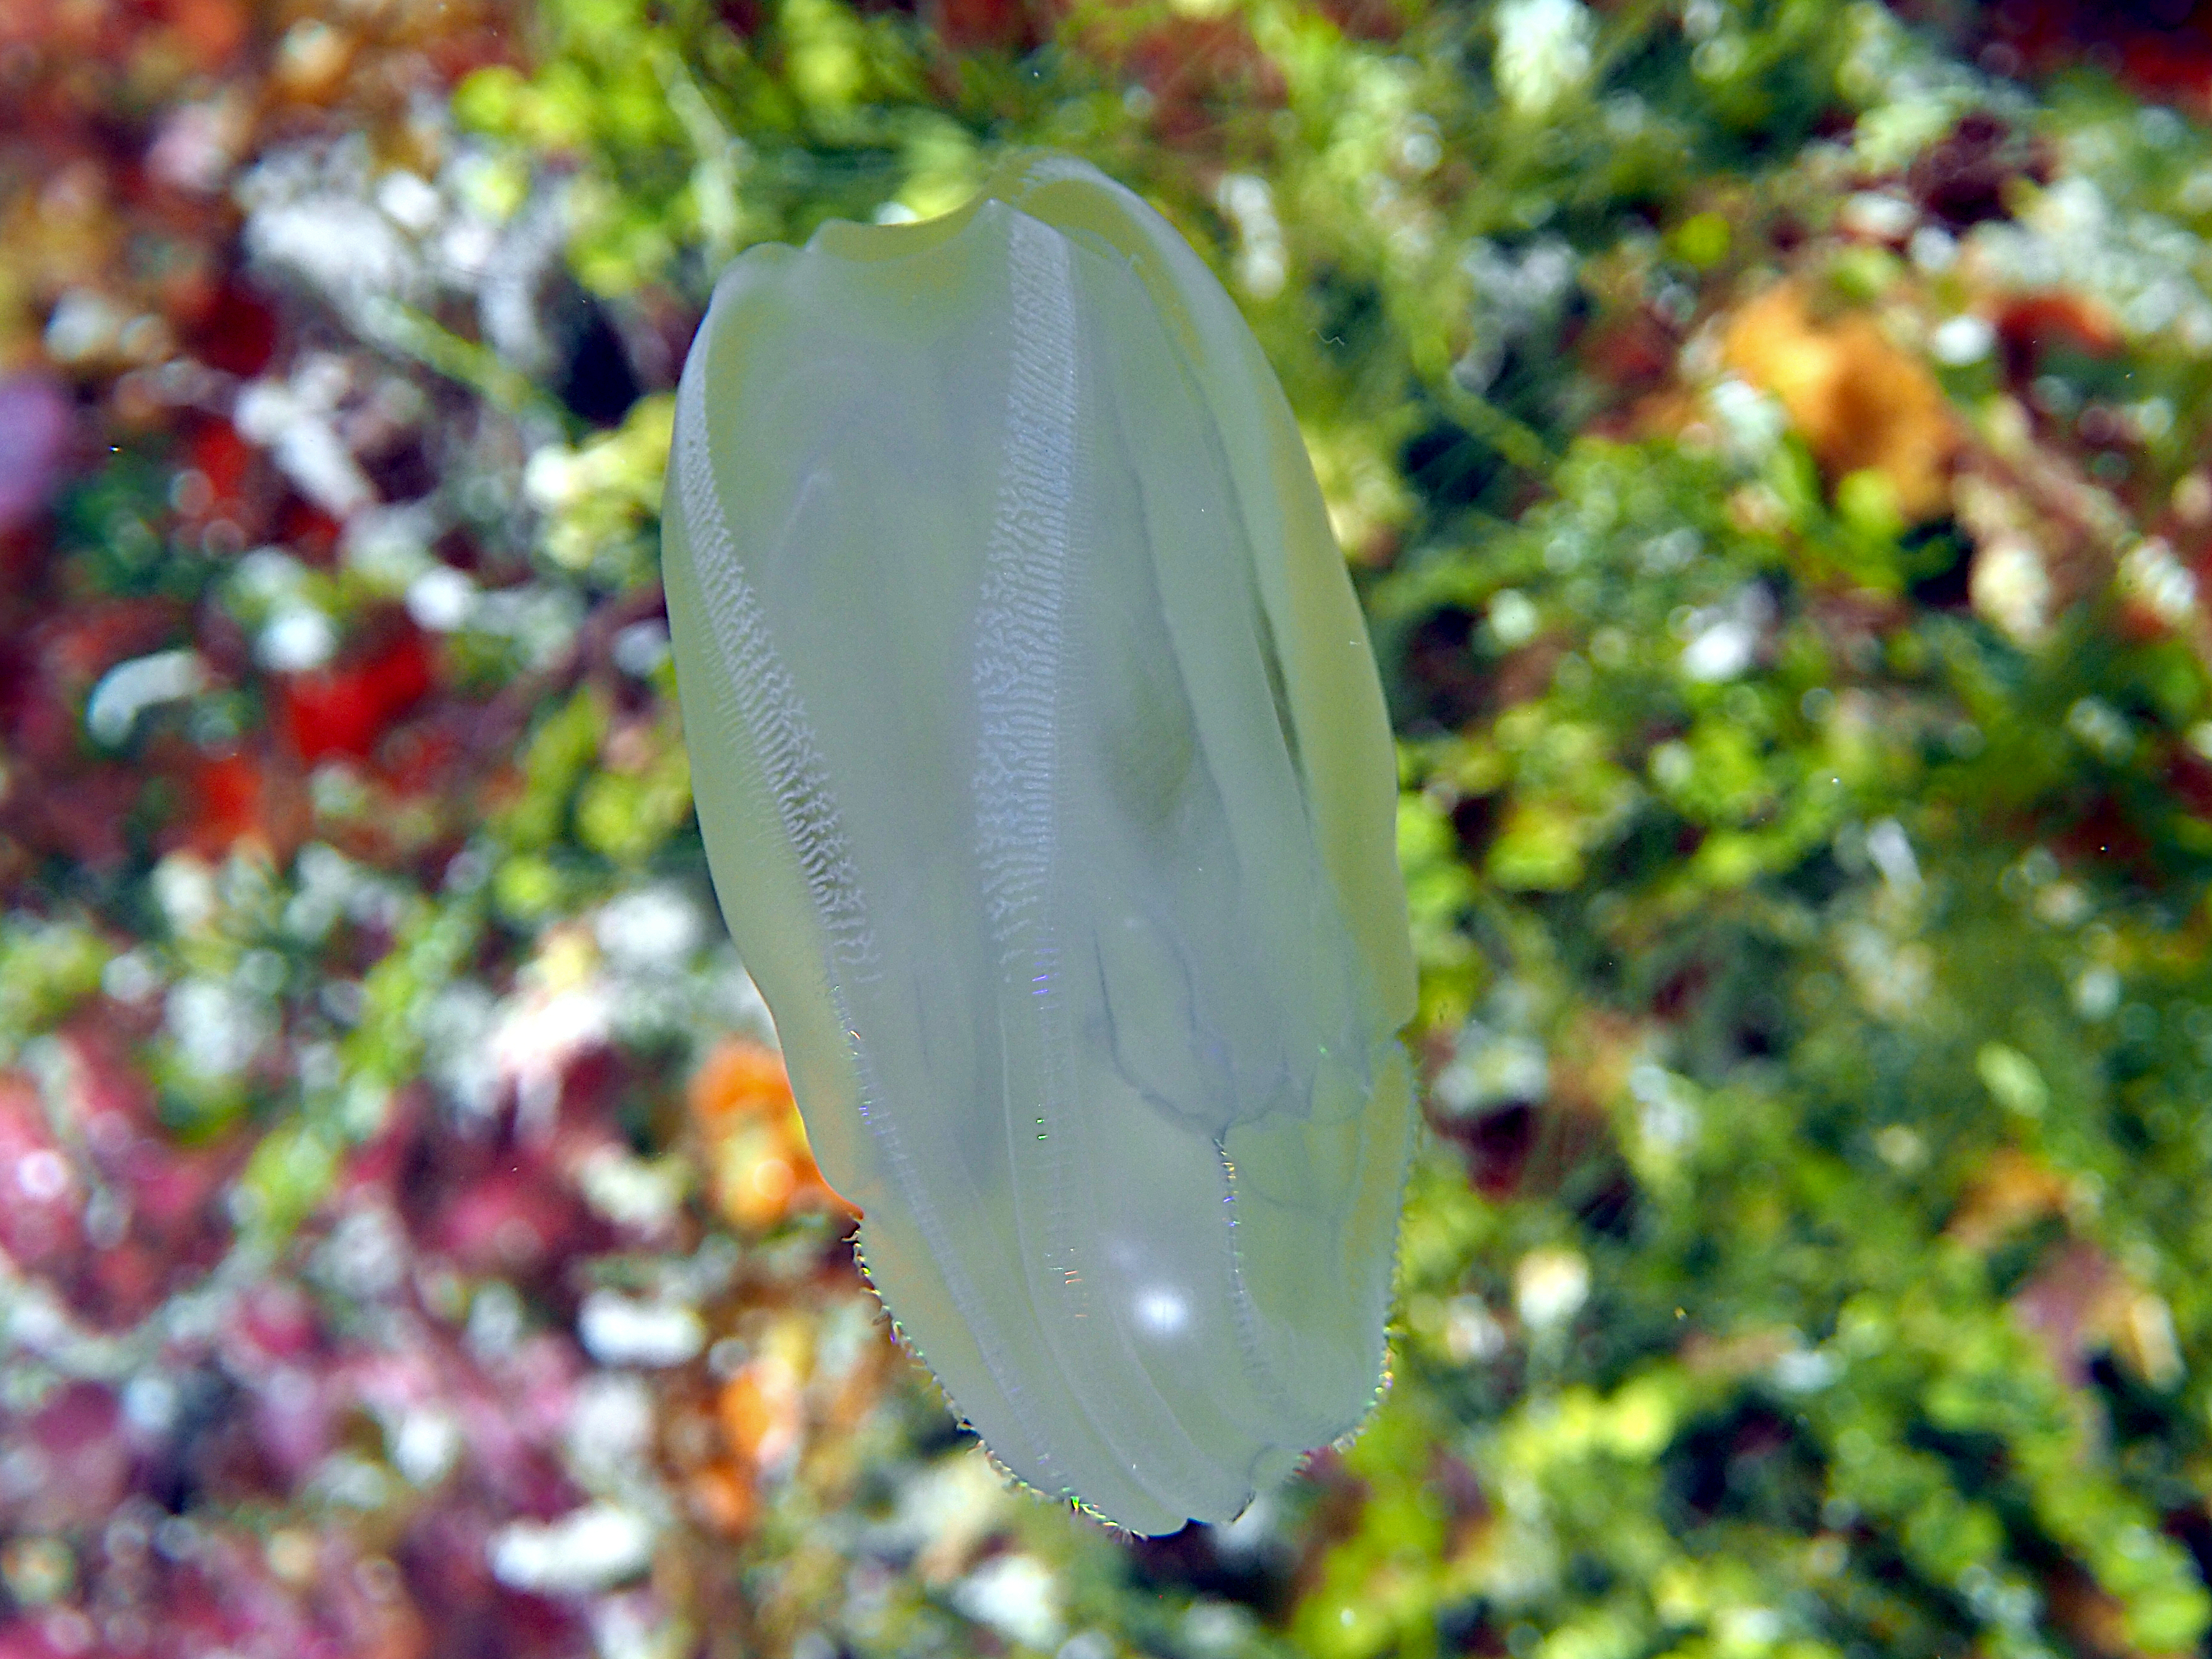 Warty Comb Jelly - Leucothea multicornis - Cozumel, Mexico